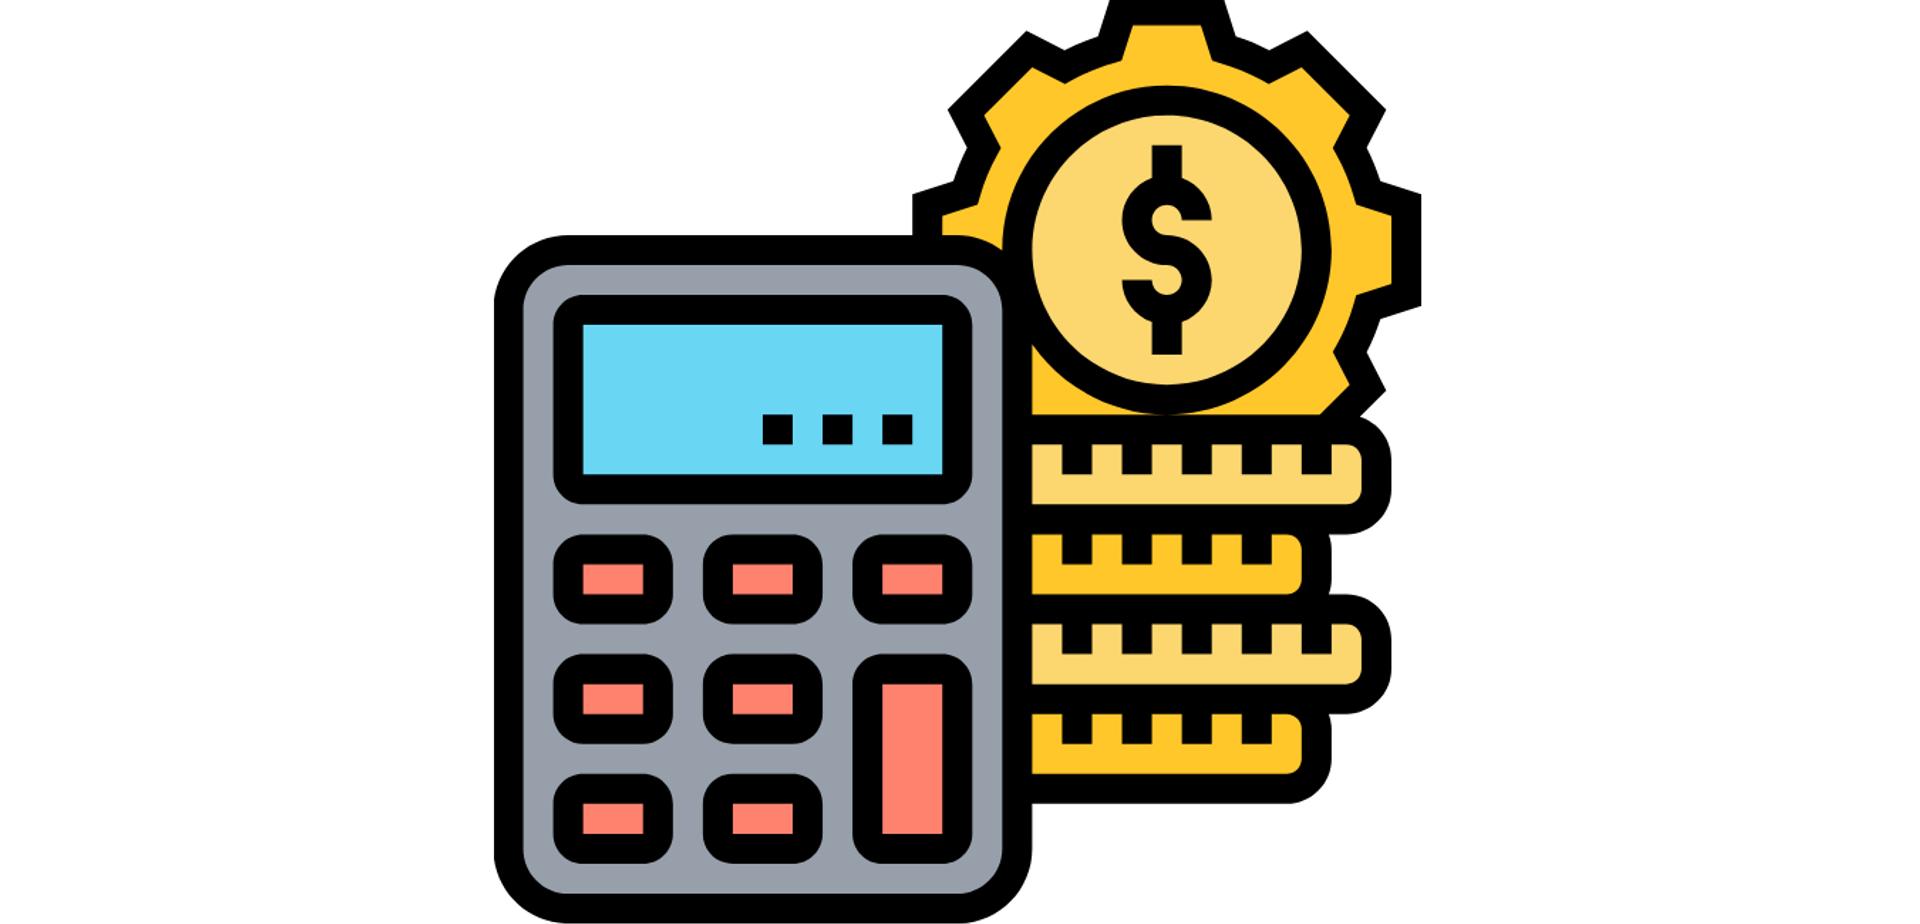 Cost calculator illustration